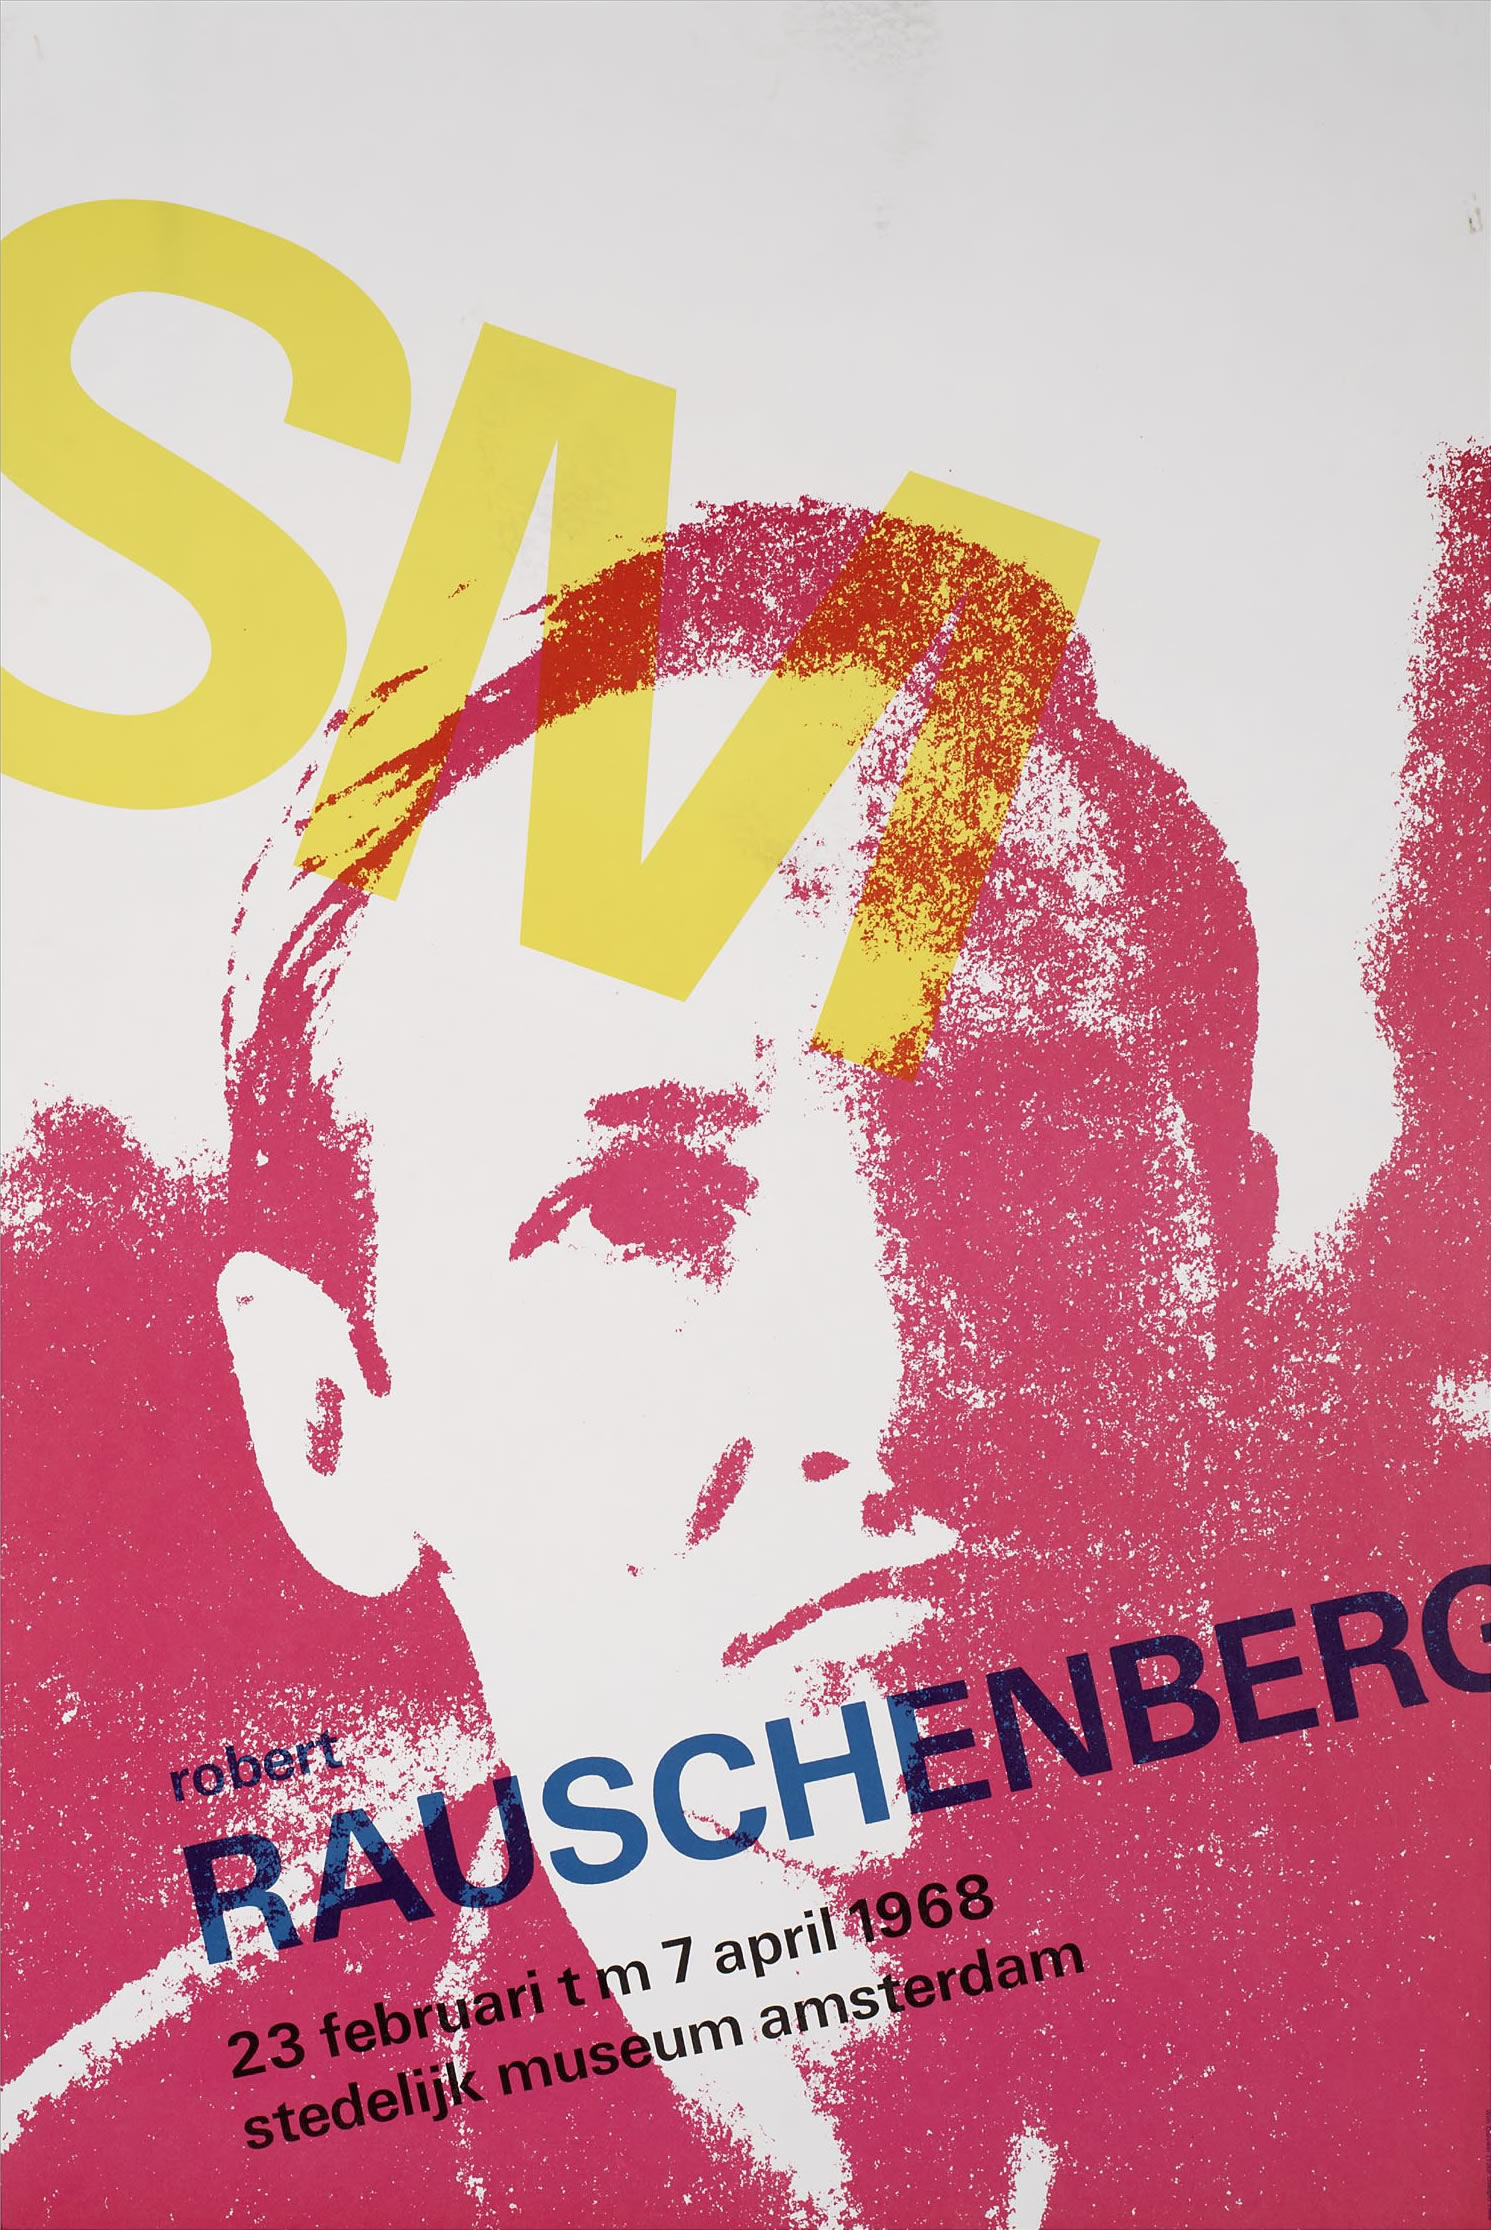 Wim Crouwel: SM Robert Rauschenberg 23 februari t m 7 april 1968 Stedelijk Museum Amsterdam. 1968-1969